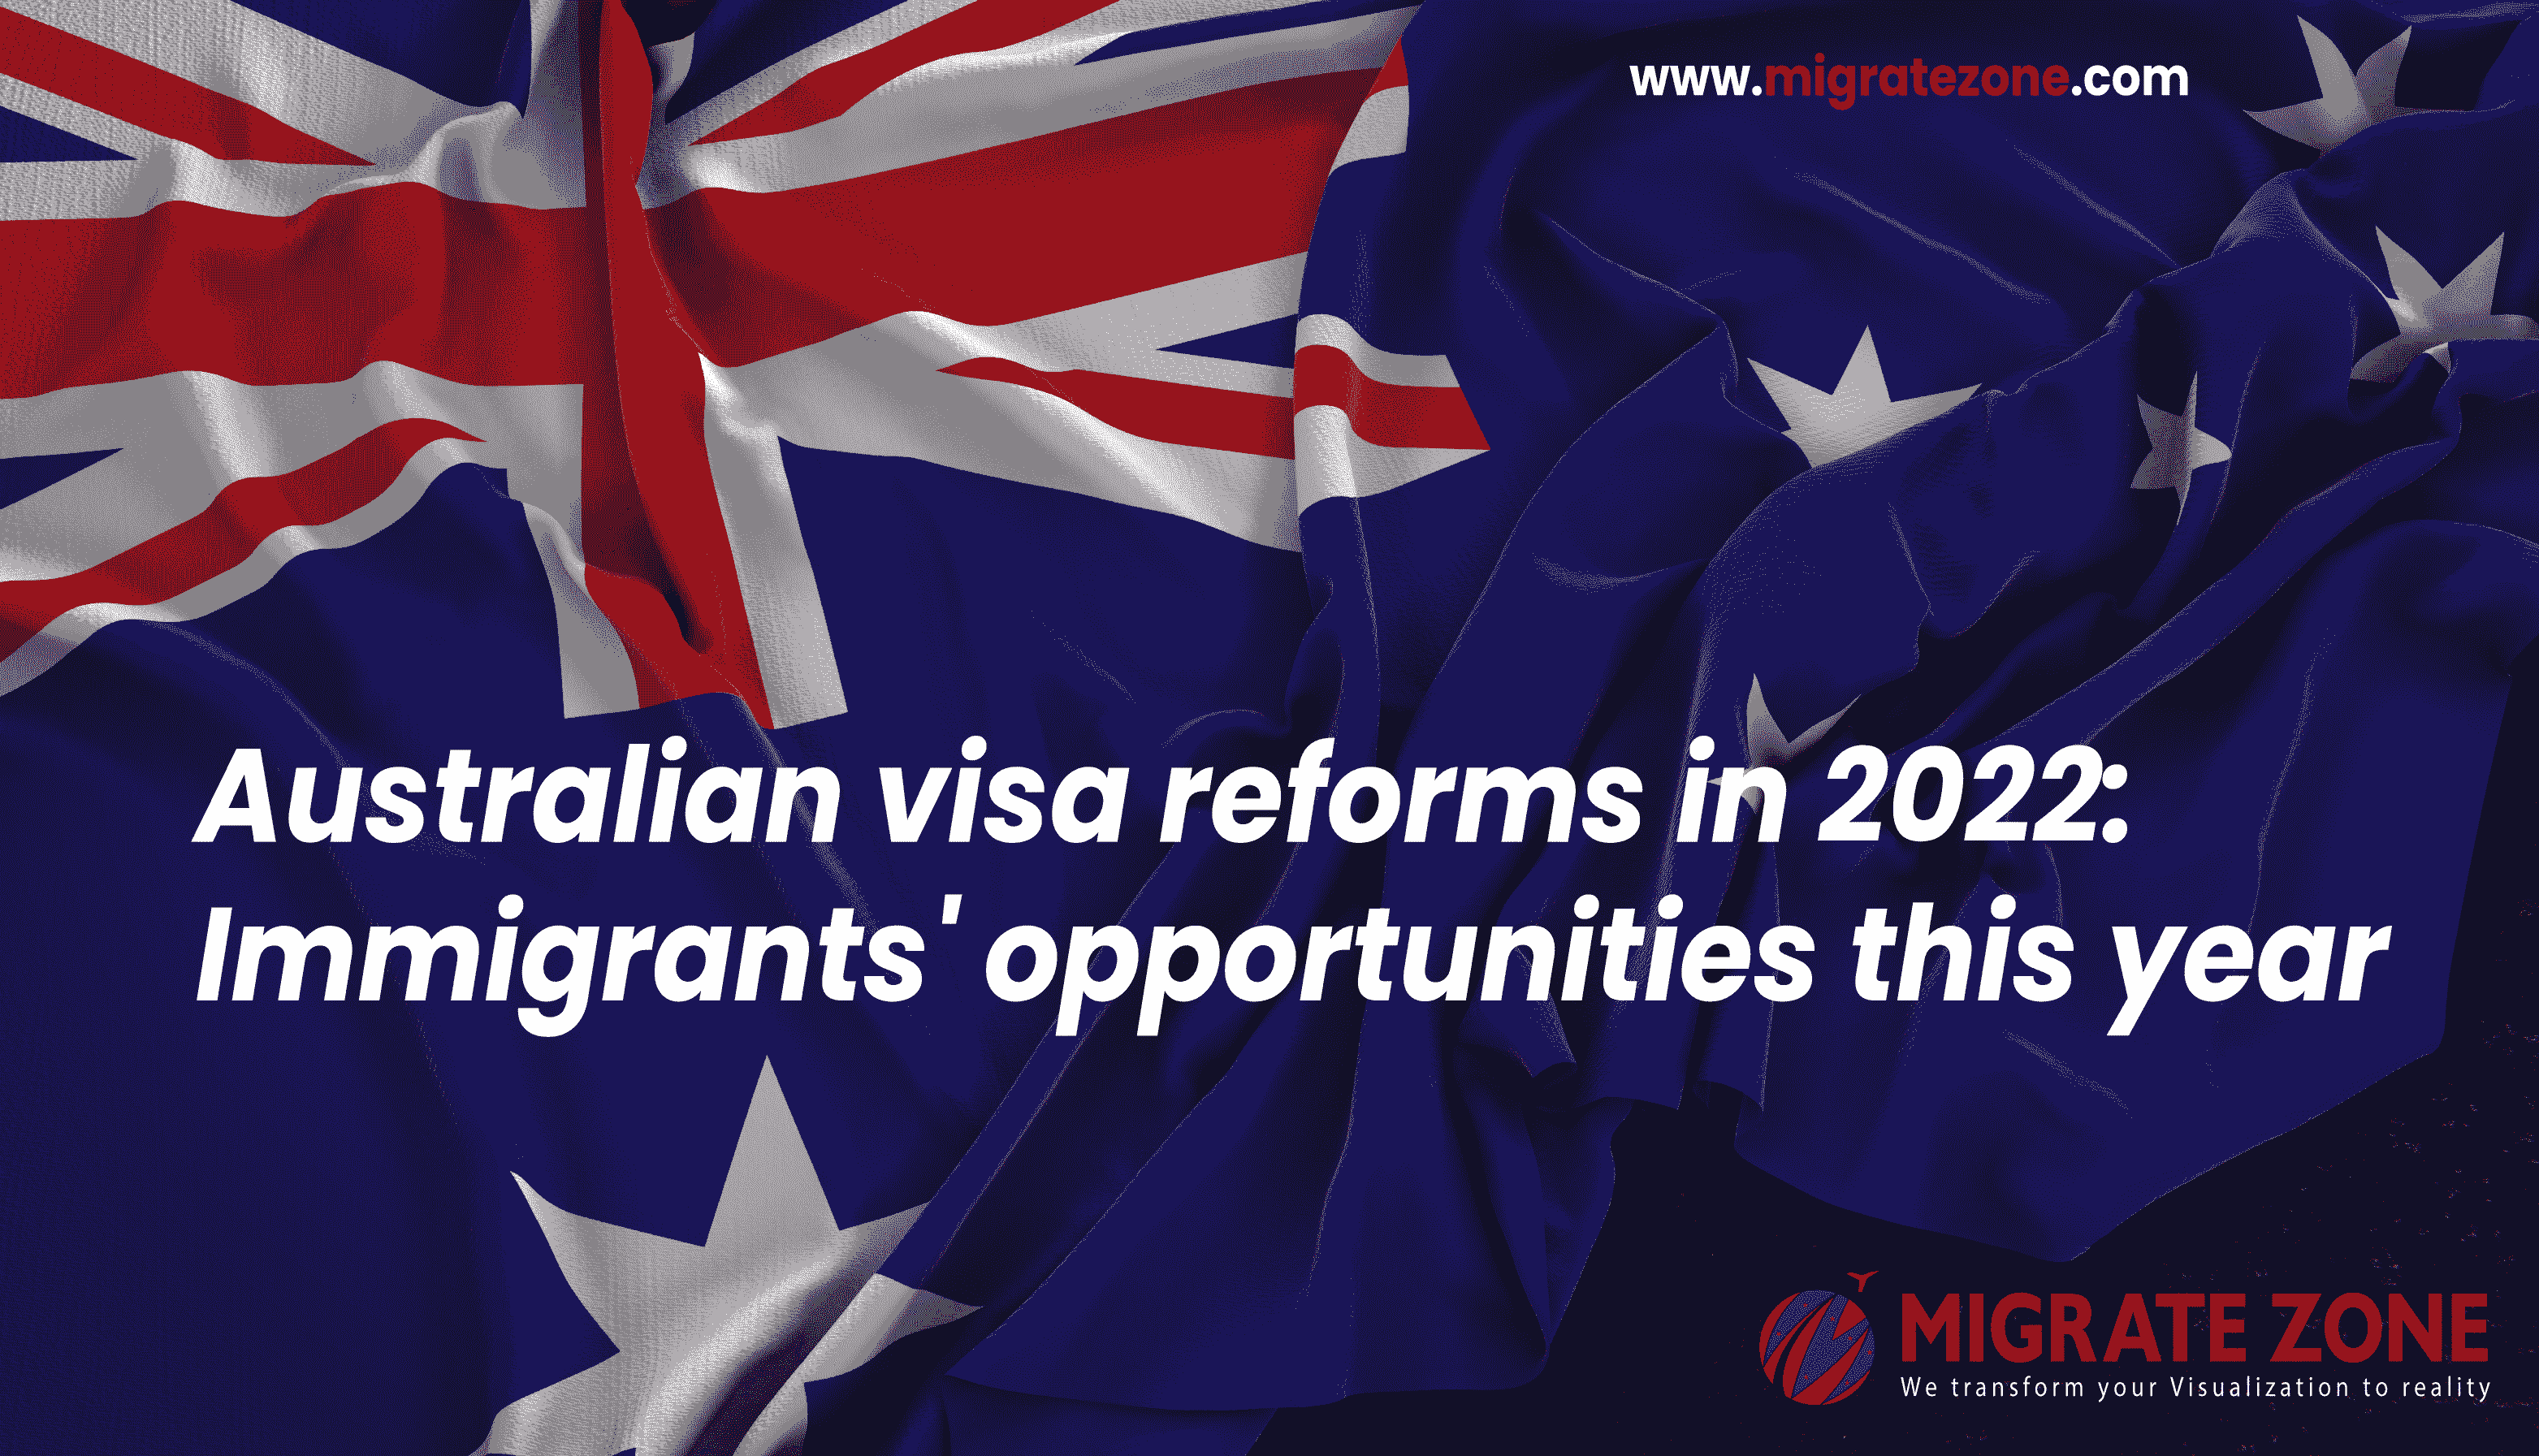 Australian visa reforms in 2022 - Migratezone